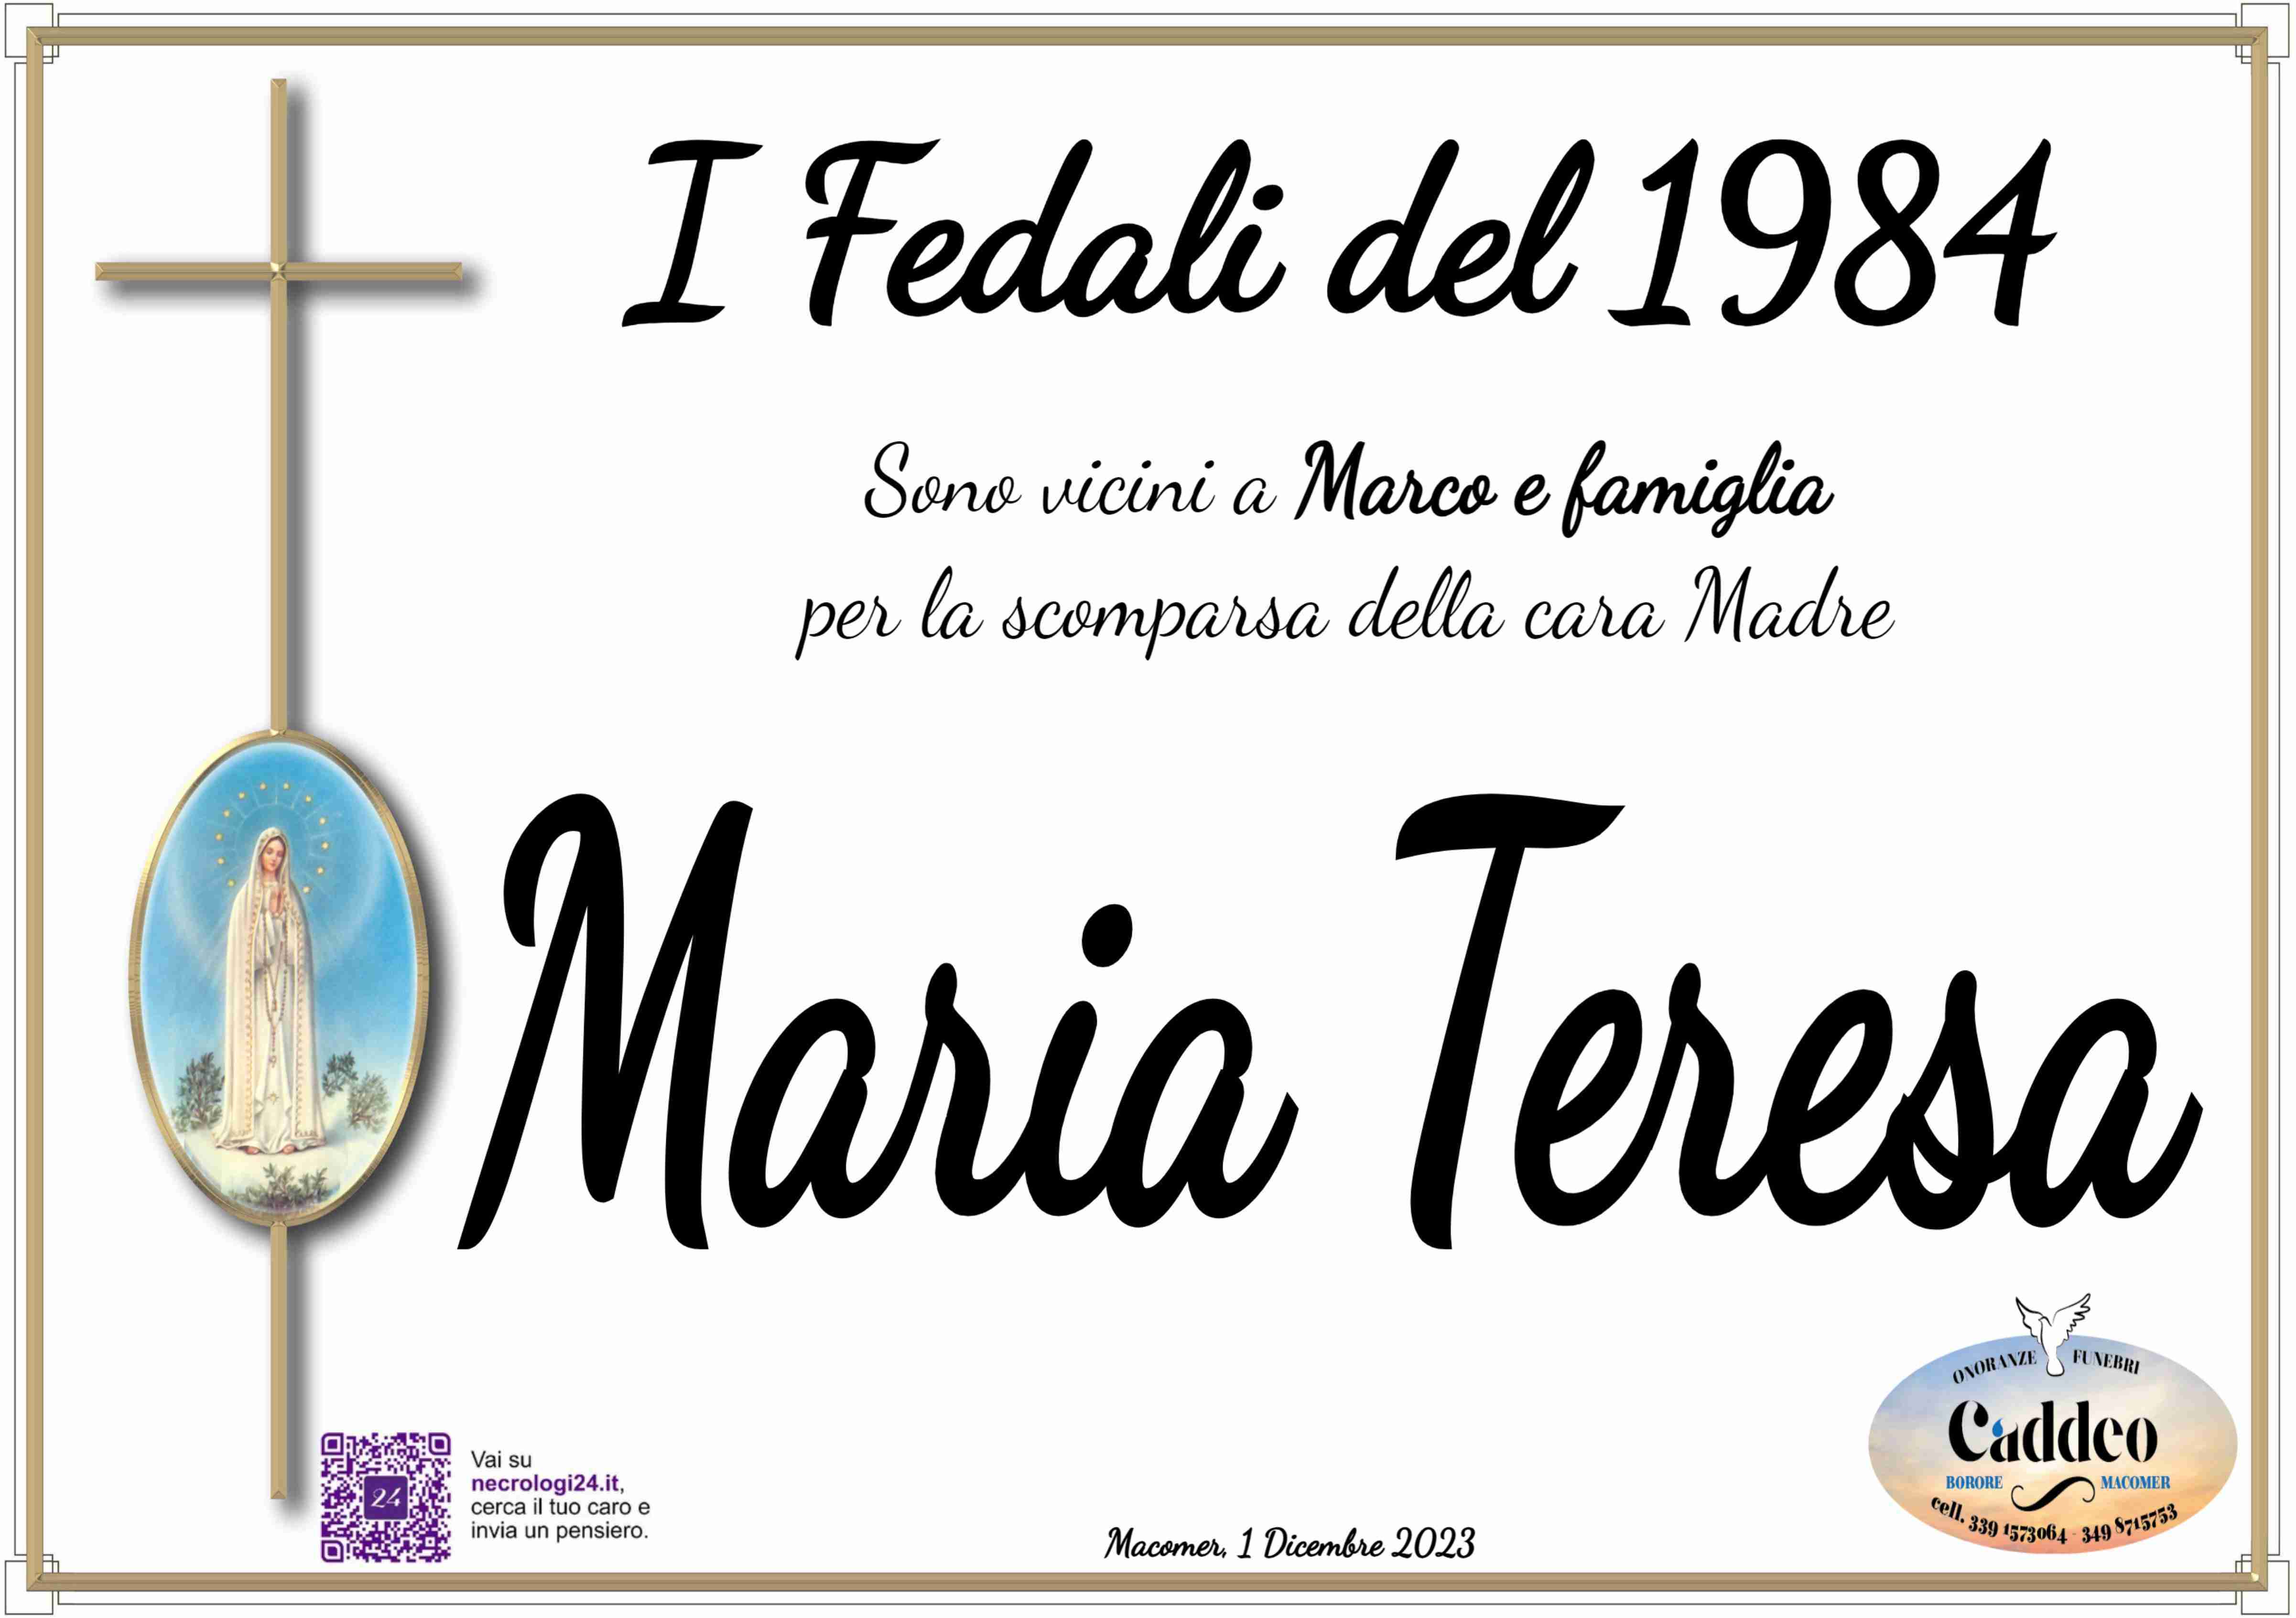 Maria Teresa Musu